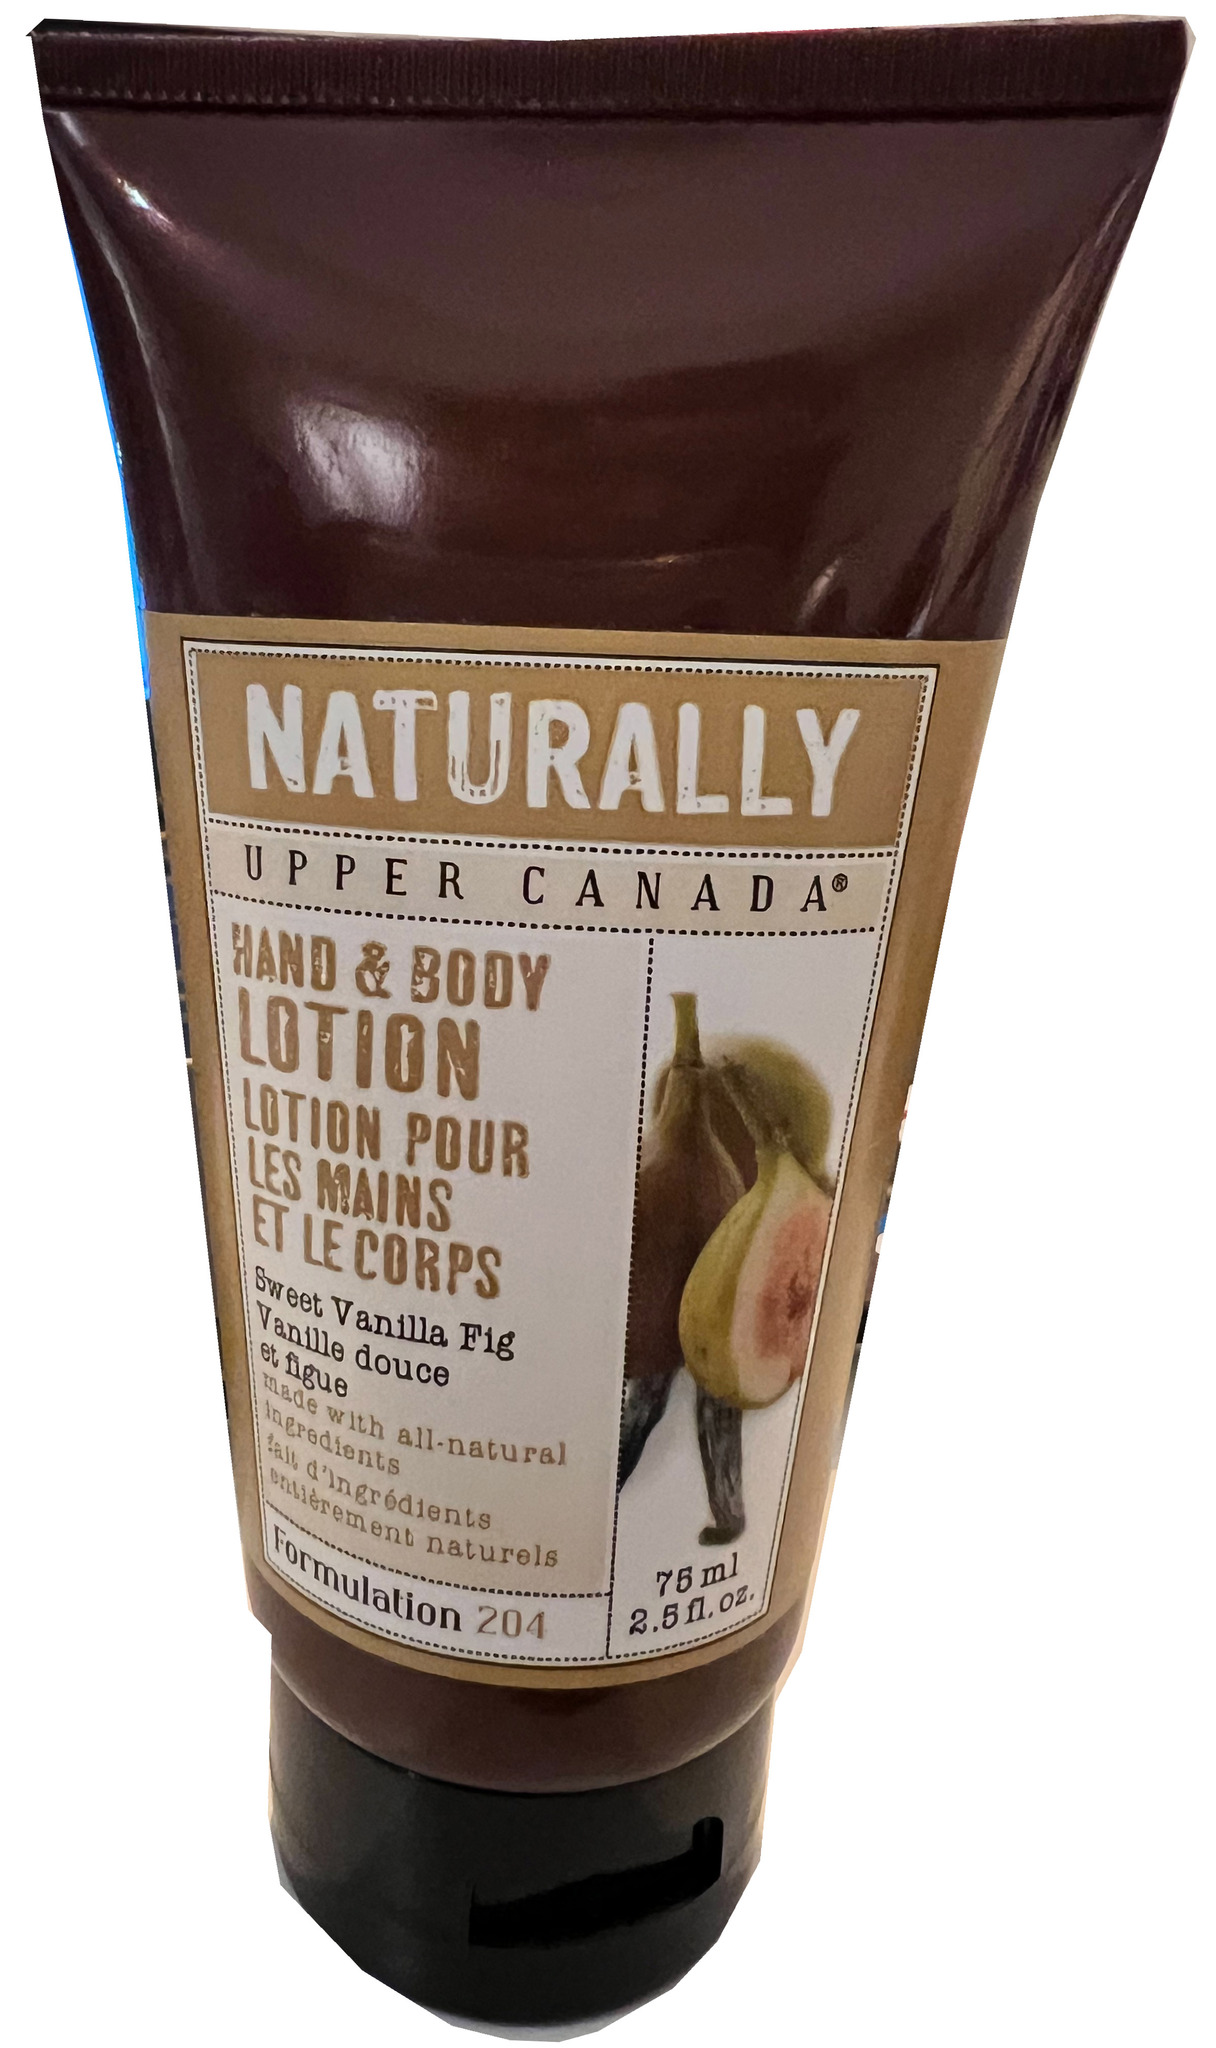 Upper Canada naturally Hand & Body Lotion-Sweet Vanilla Fig 75ml